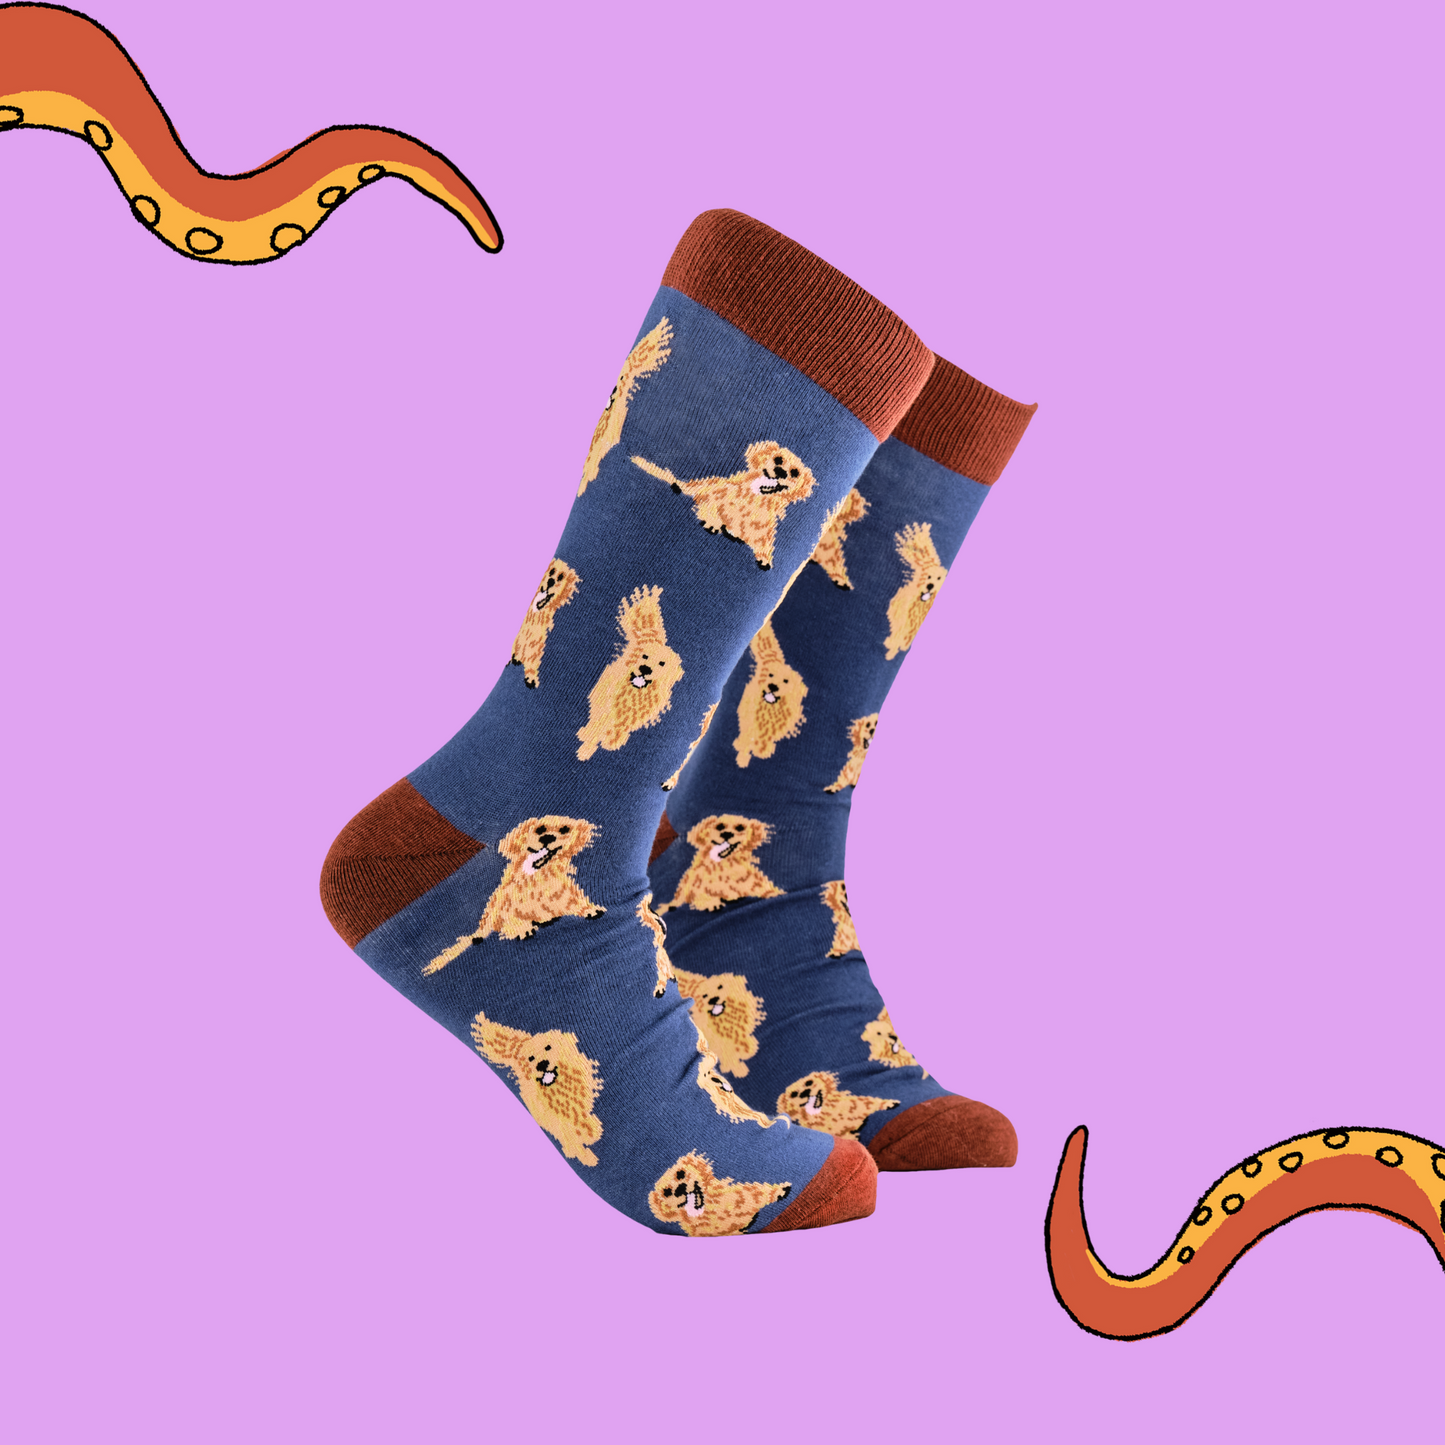 A pair of socks depicting golden retrievers. Blue legs, brown cuff, heel and toe.